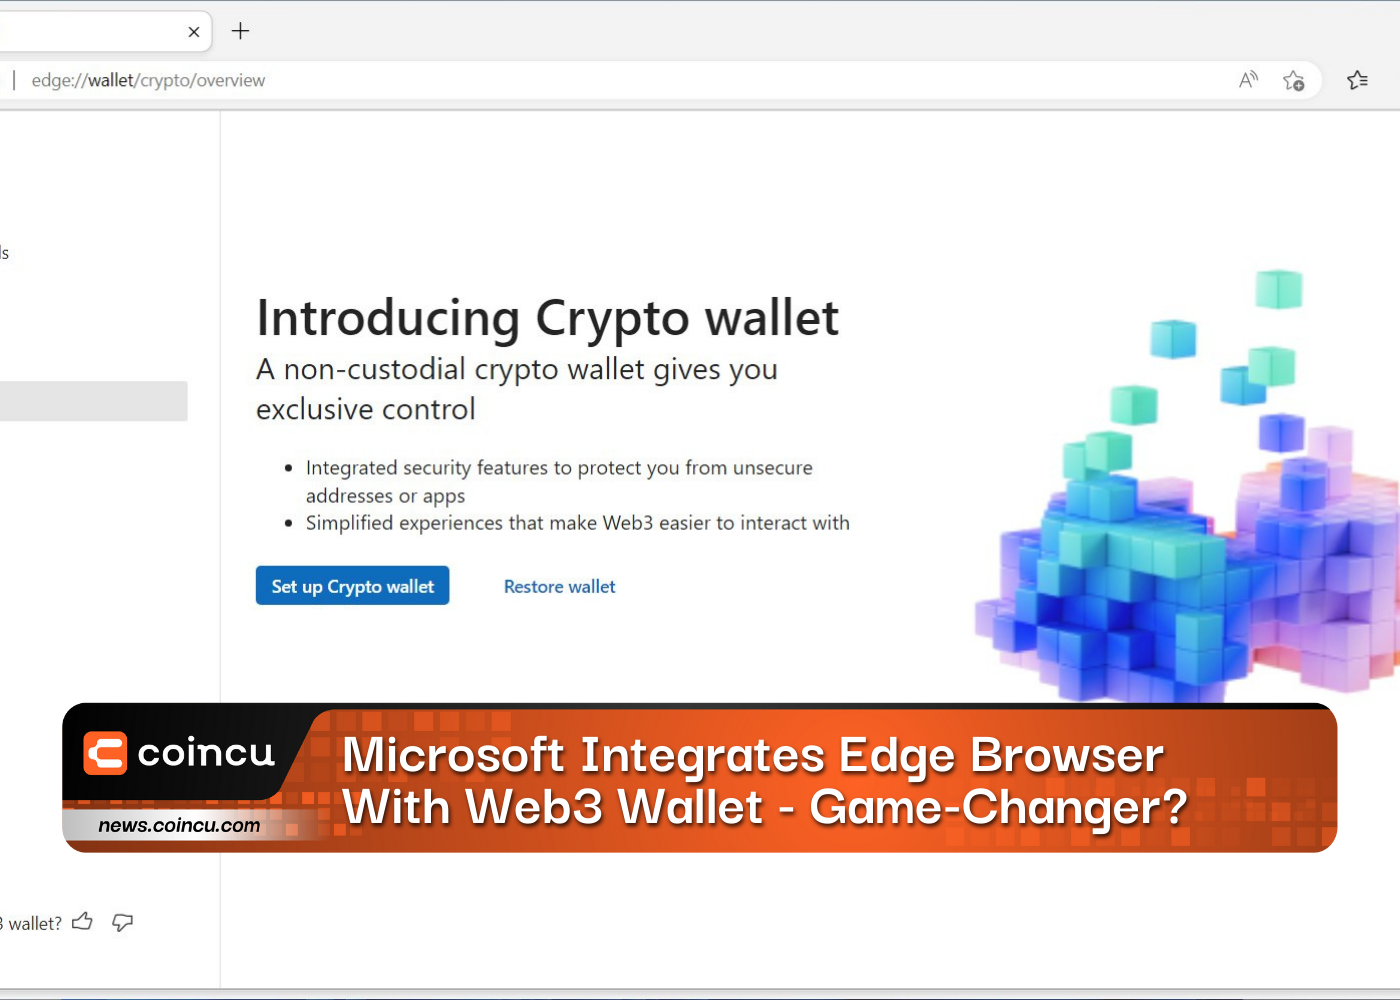 Microsoft Integrates Edge Browser